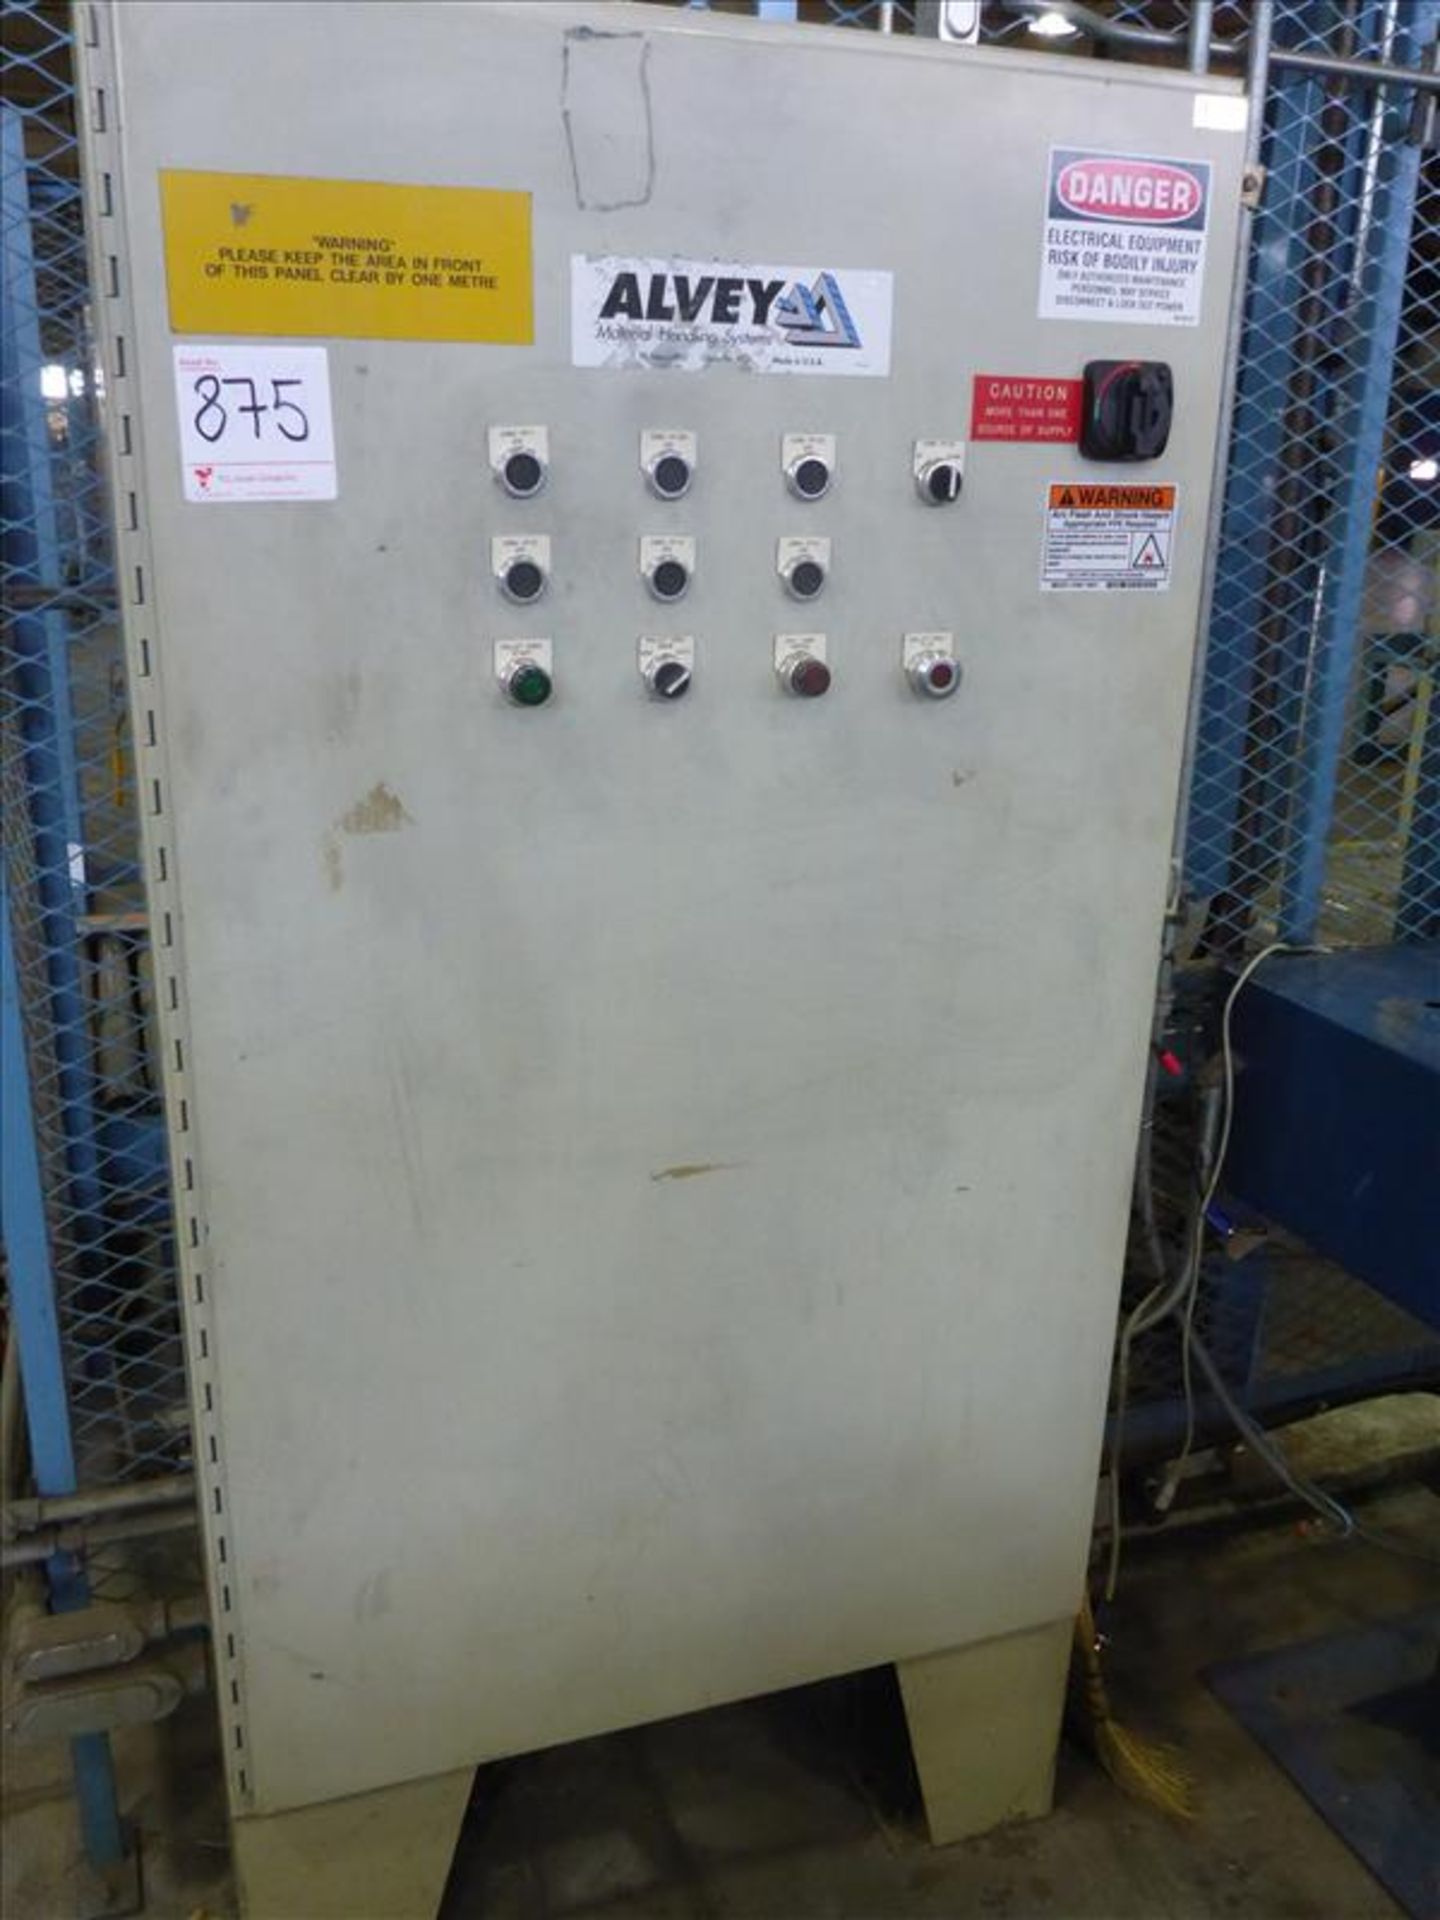 Alvey conveyor control panel